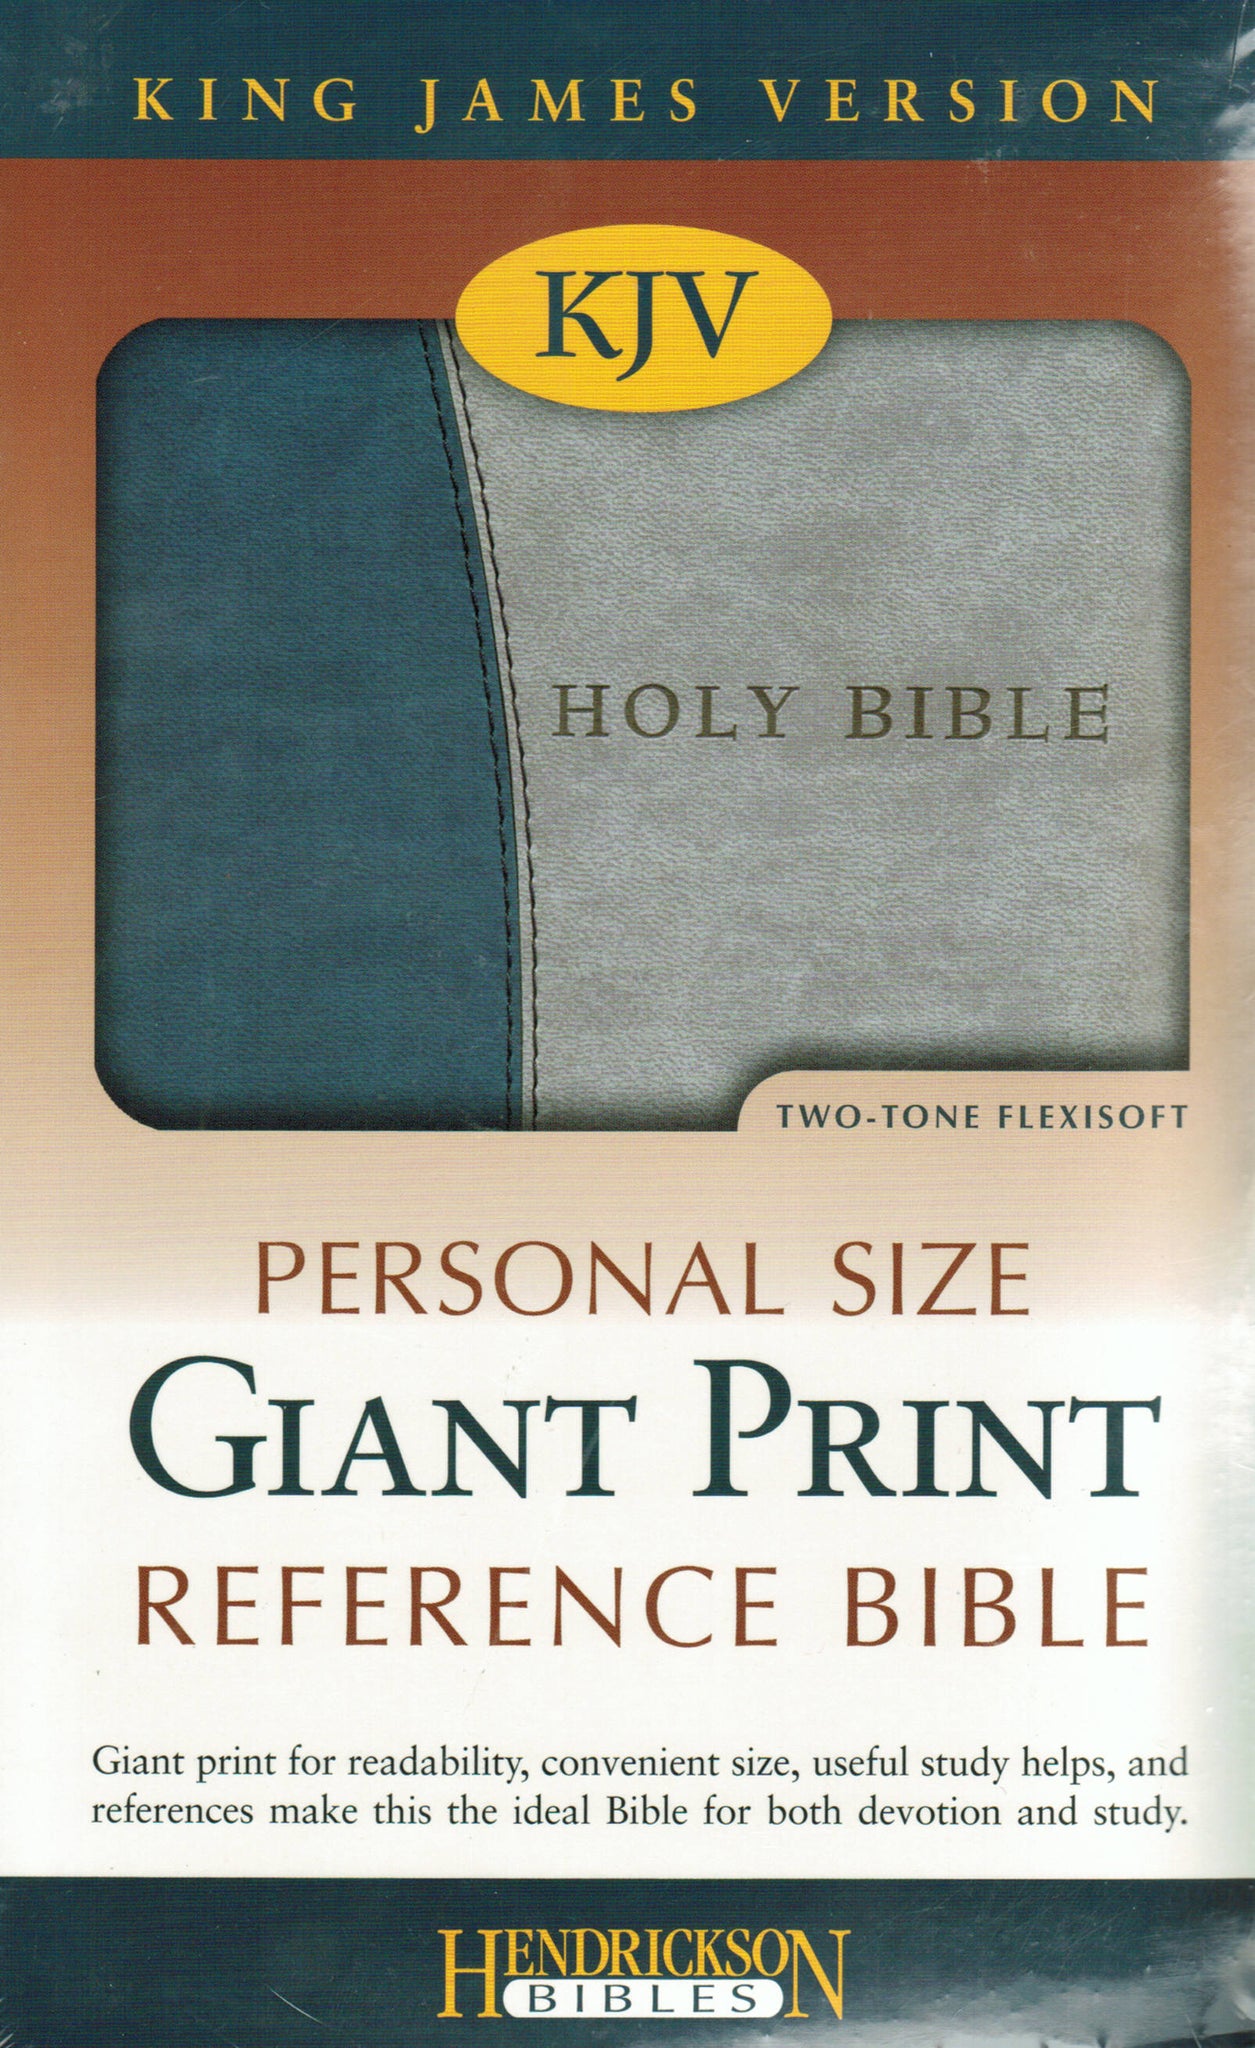 KJV Bible - Hendrickson Personal Size Giant Print Reference (Imitation)